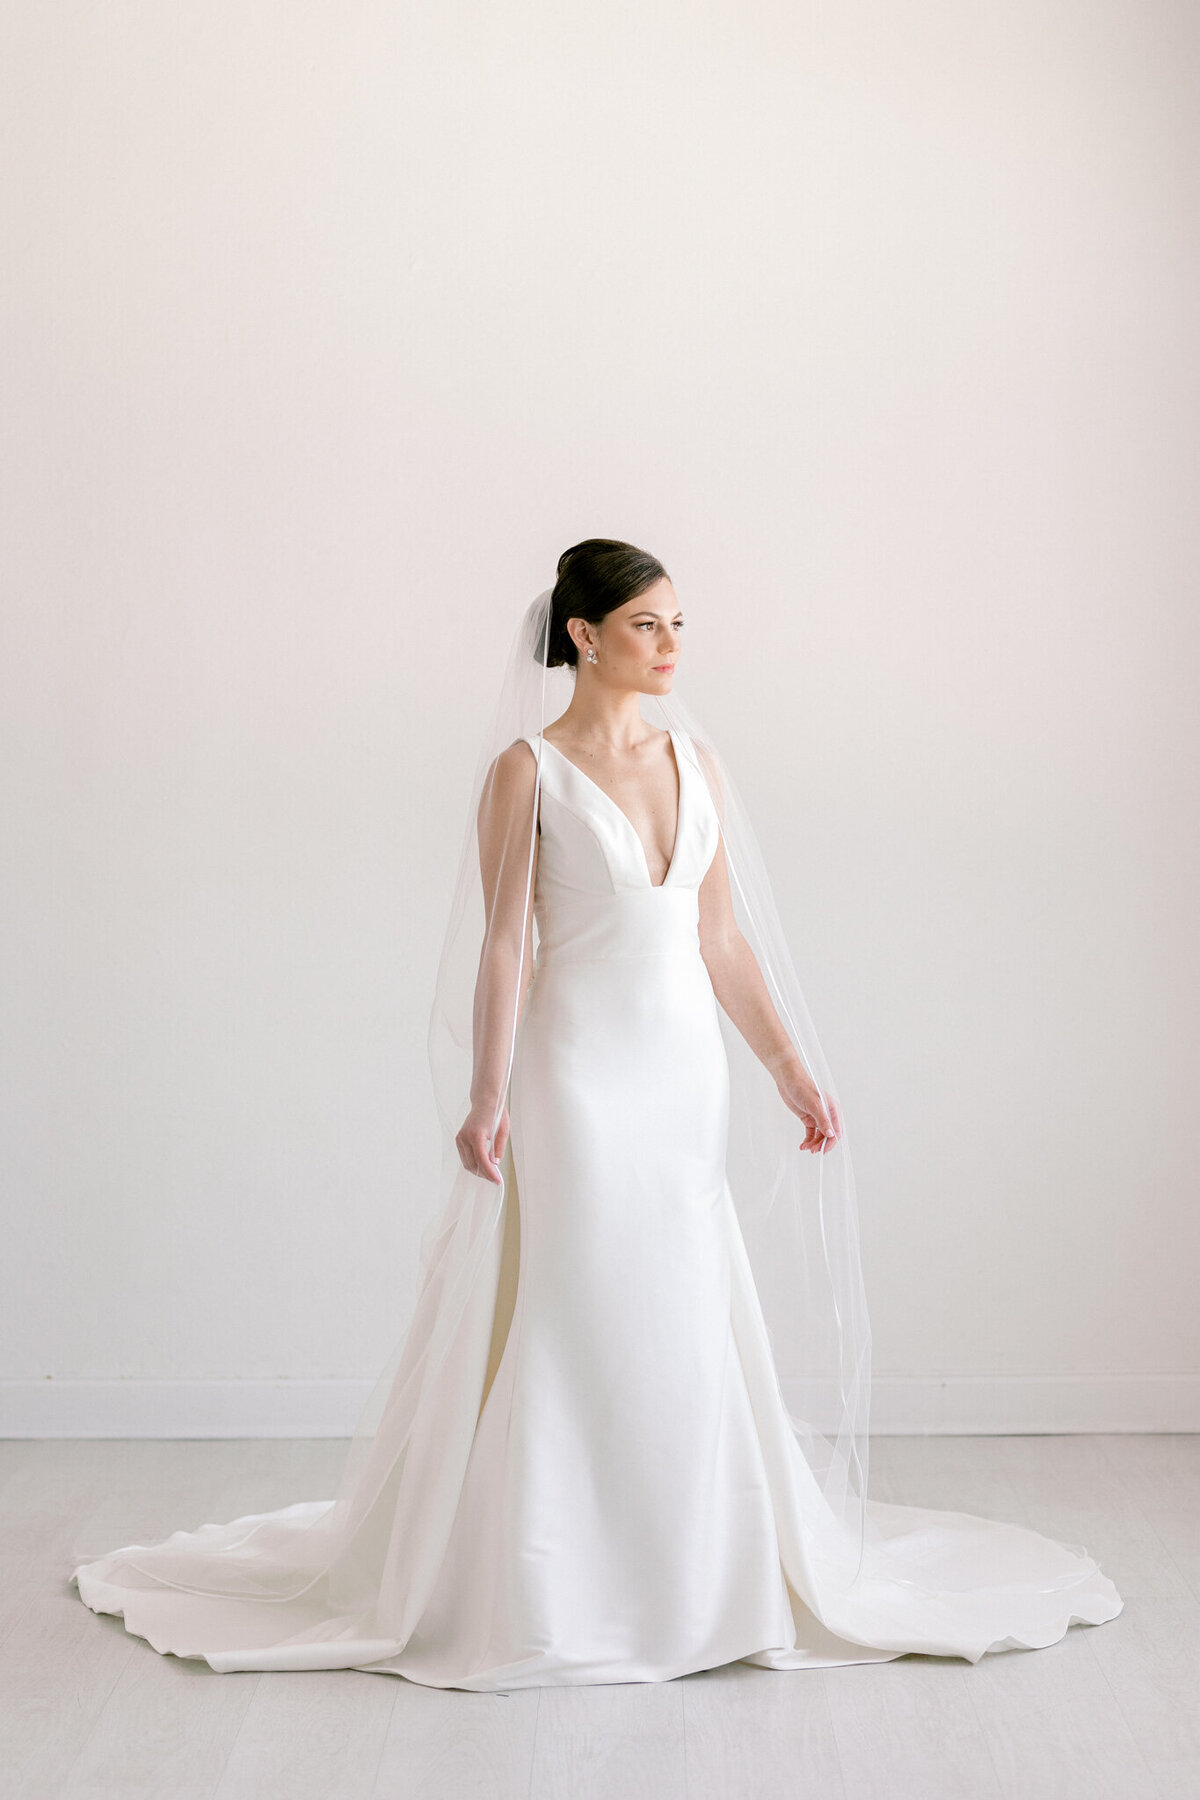 Samantha's Bridal Portraits at the Lumen Room | Dallas Wedding Photographer | Sami Kathryn Photography-6